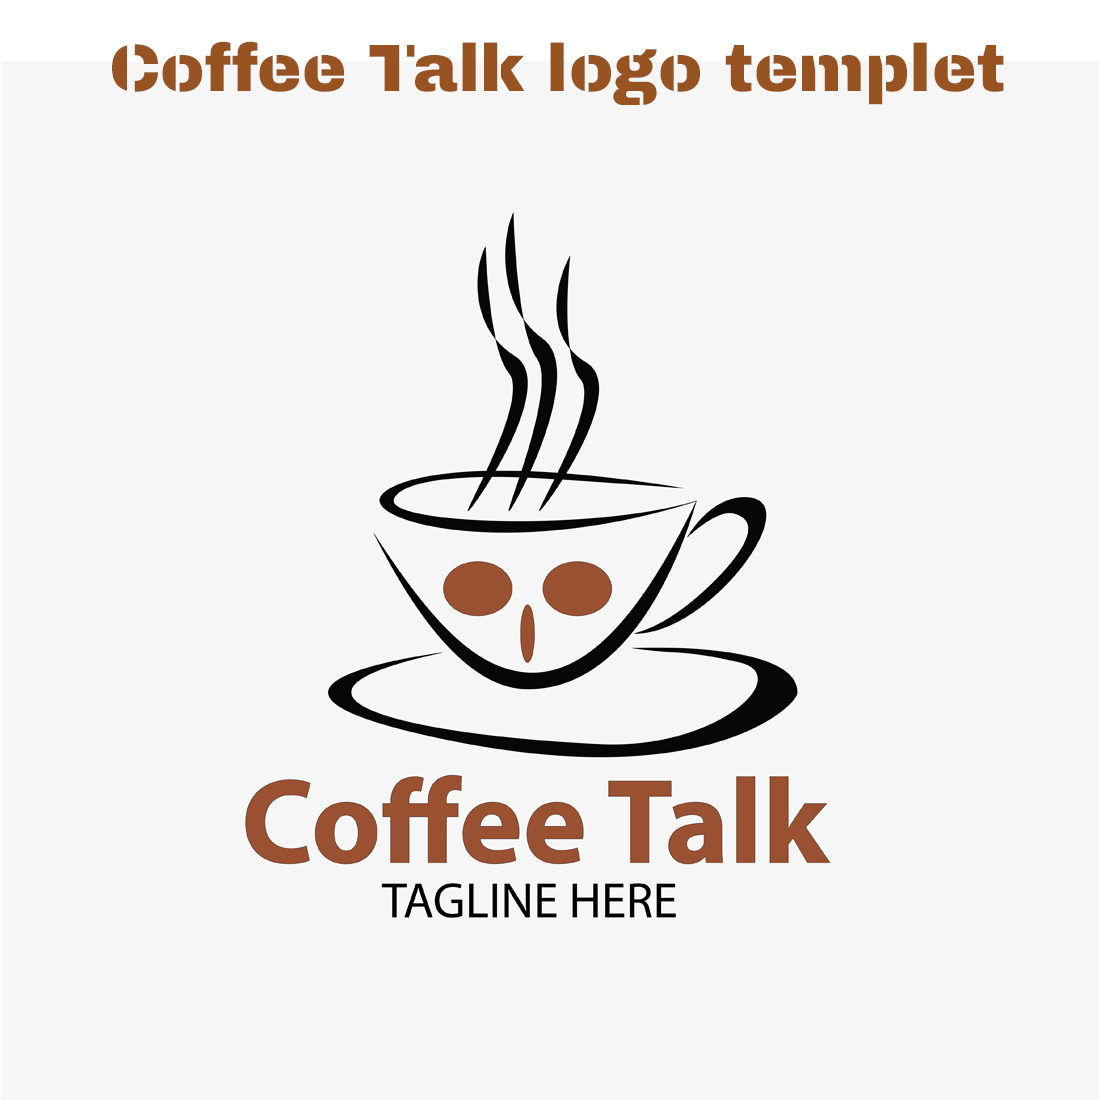 Coffee Shop Logo templet Set cover image.